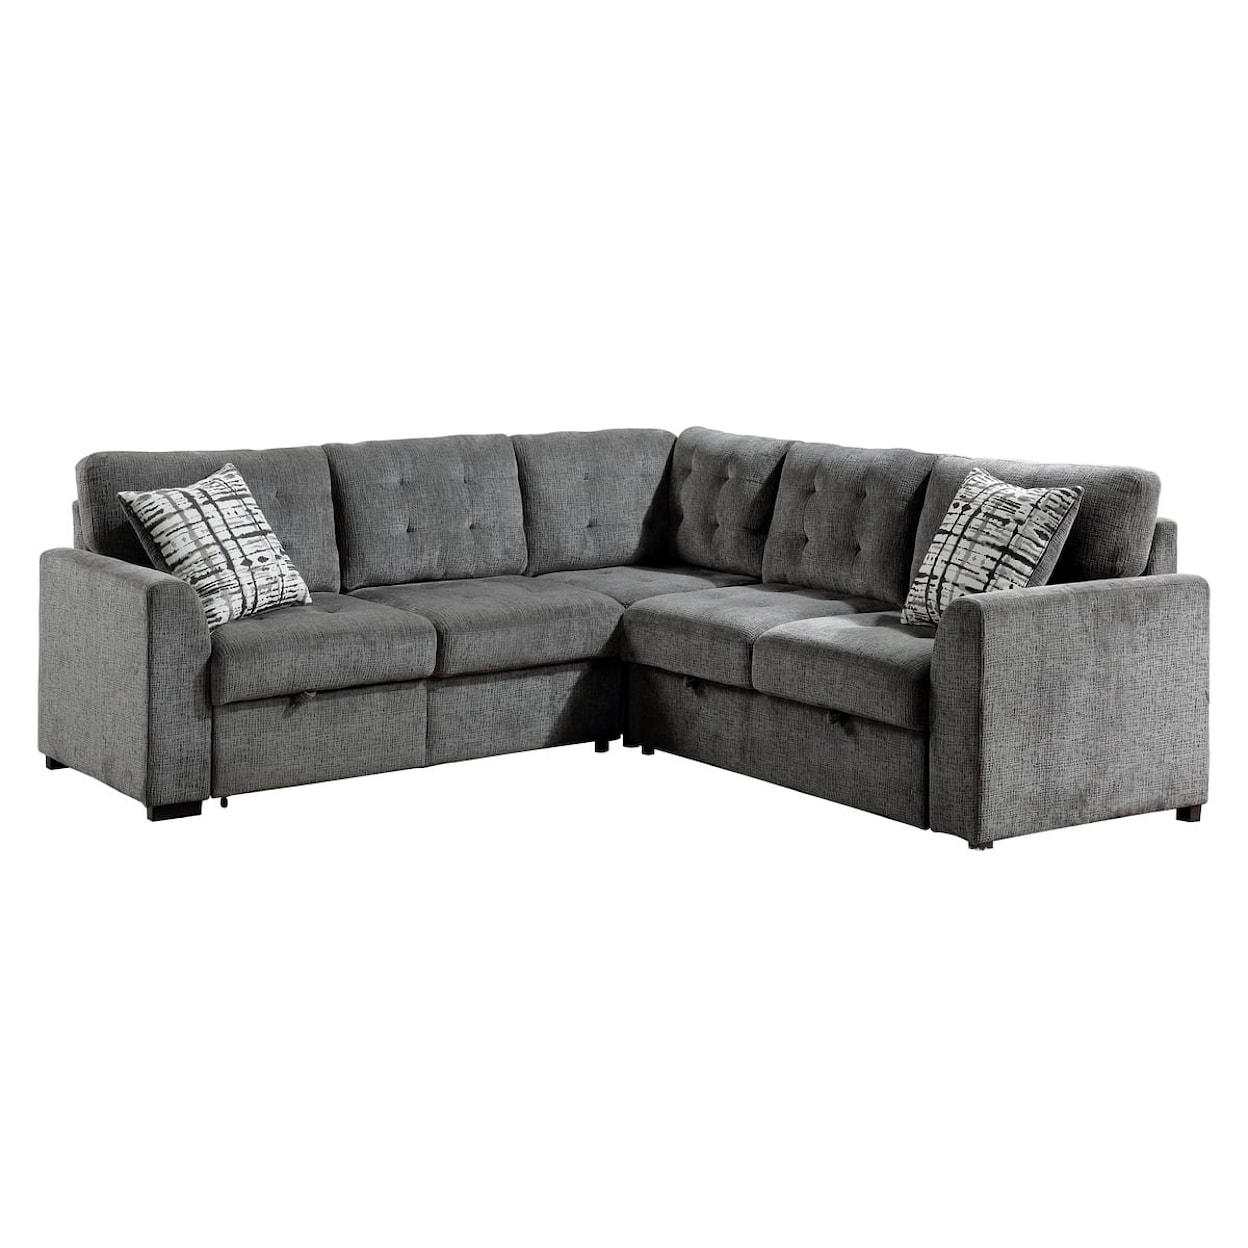 Homelegance Furniture Lanning 3-Piece Sectional Sofa